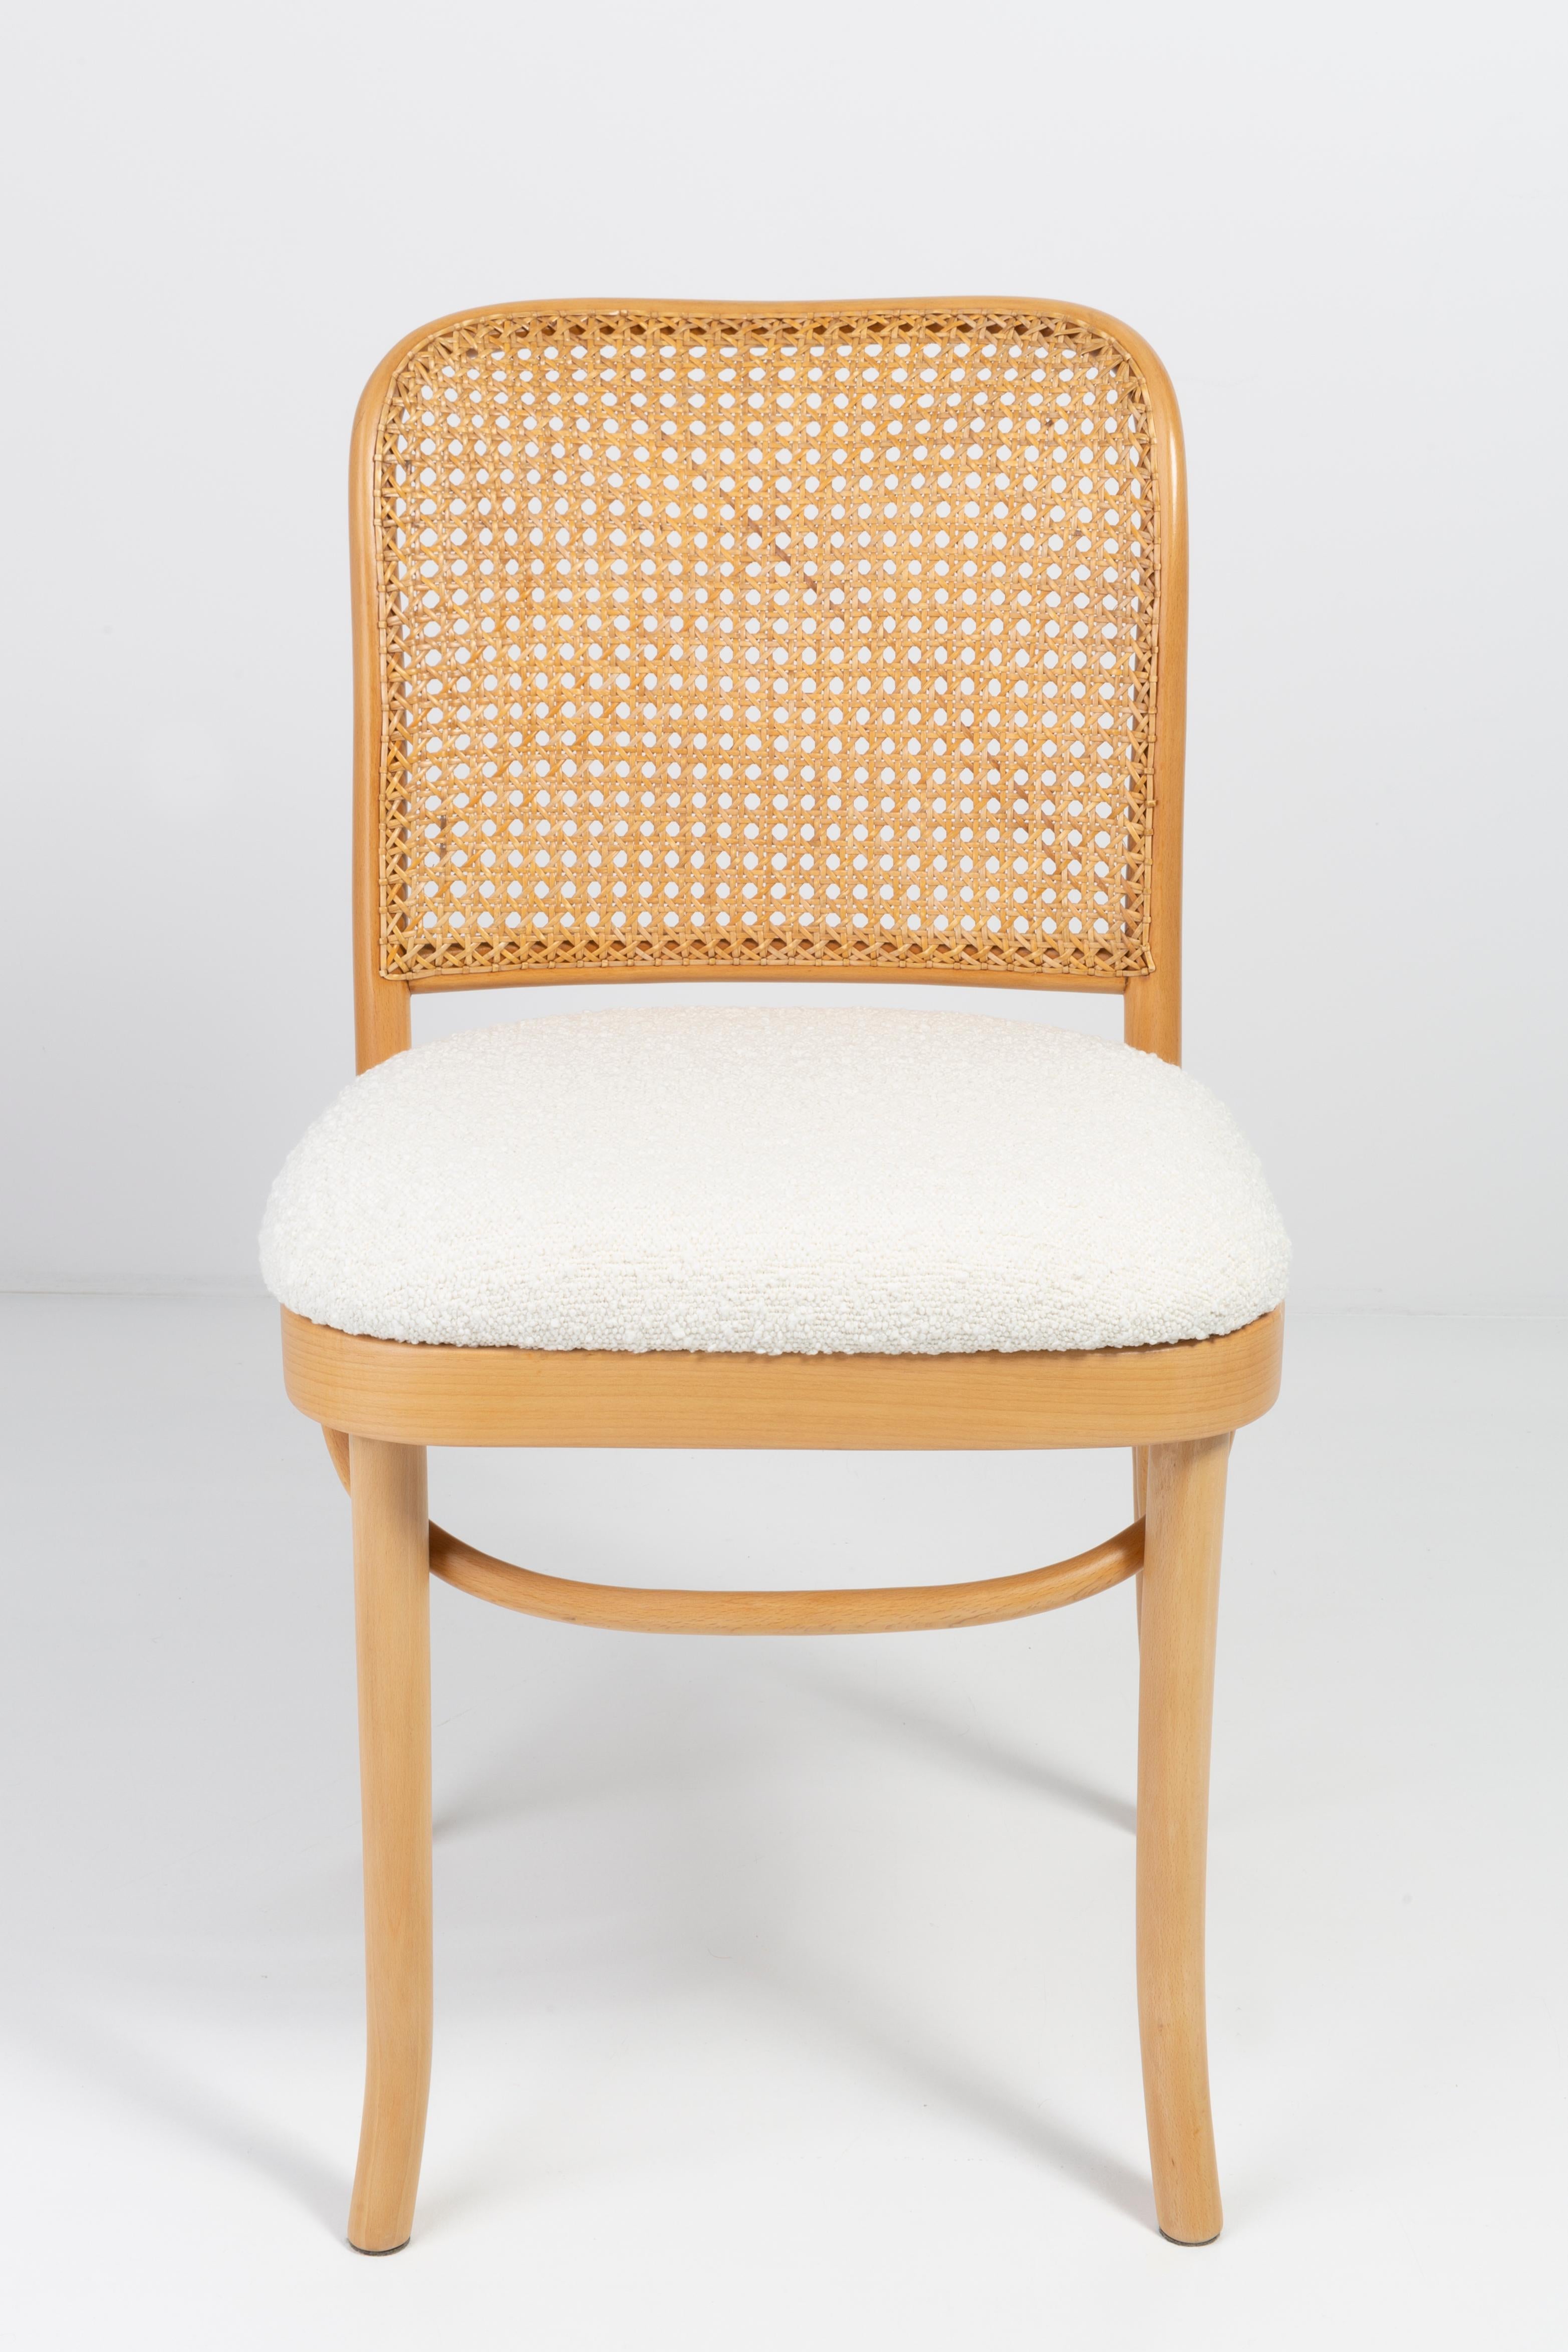 Polish Light White Boucle Thonet Wood Rattan Chair, 1960s For Sale